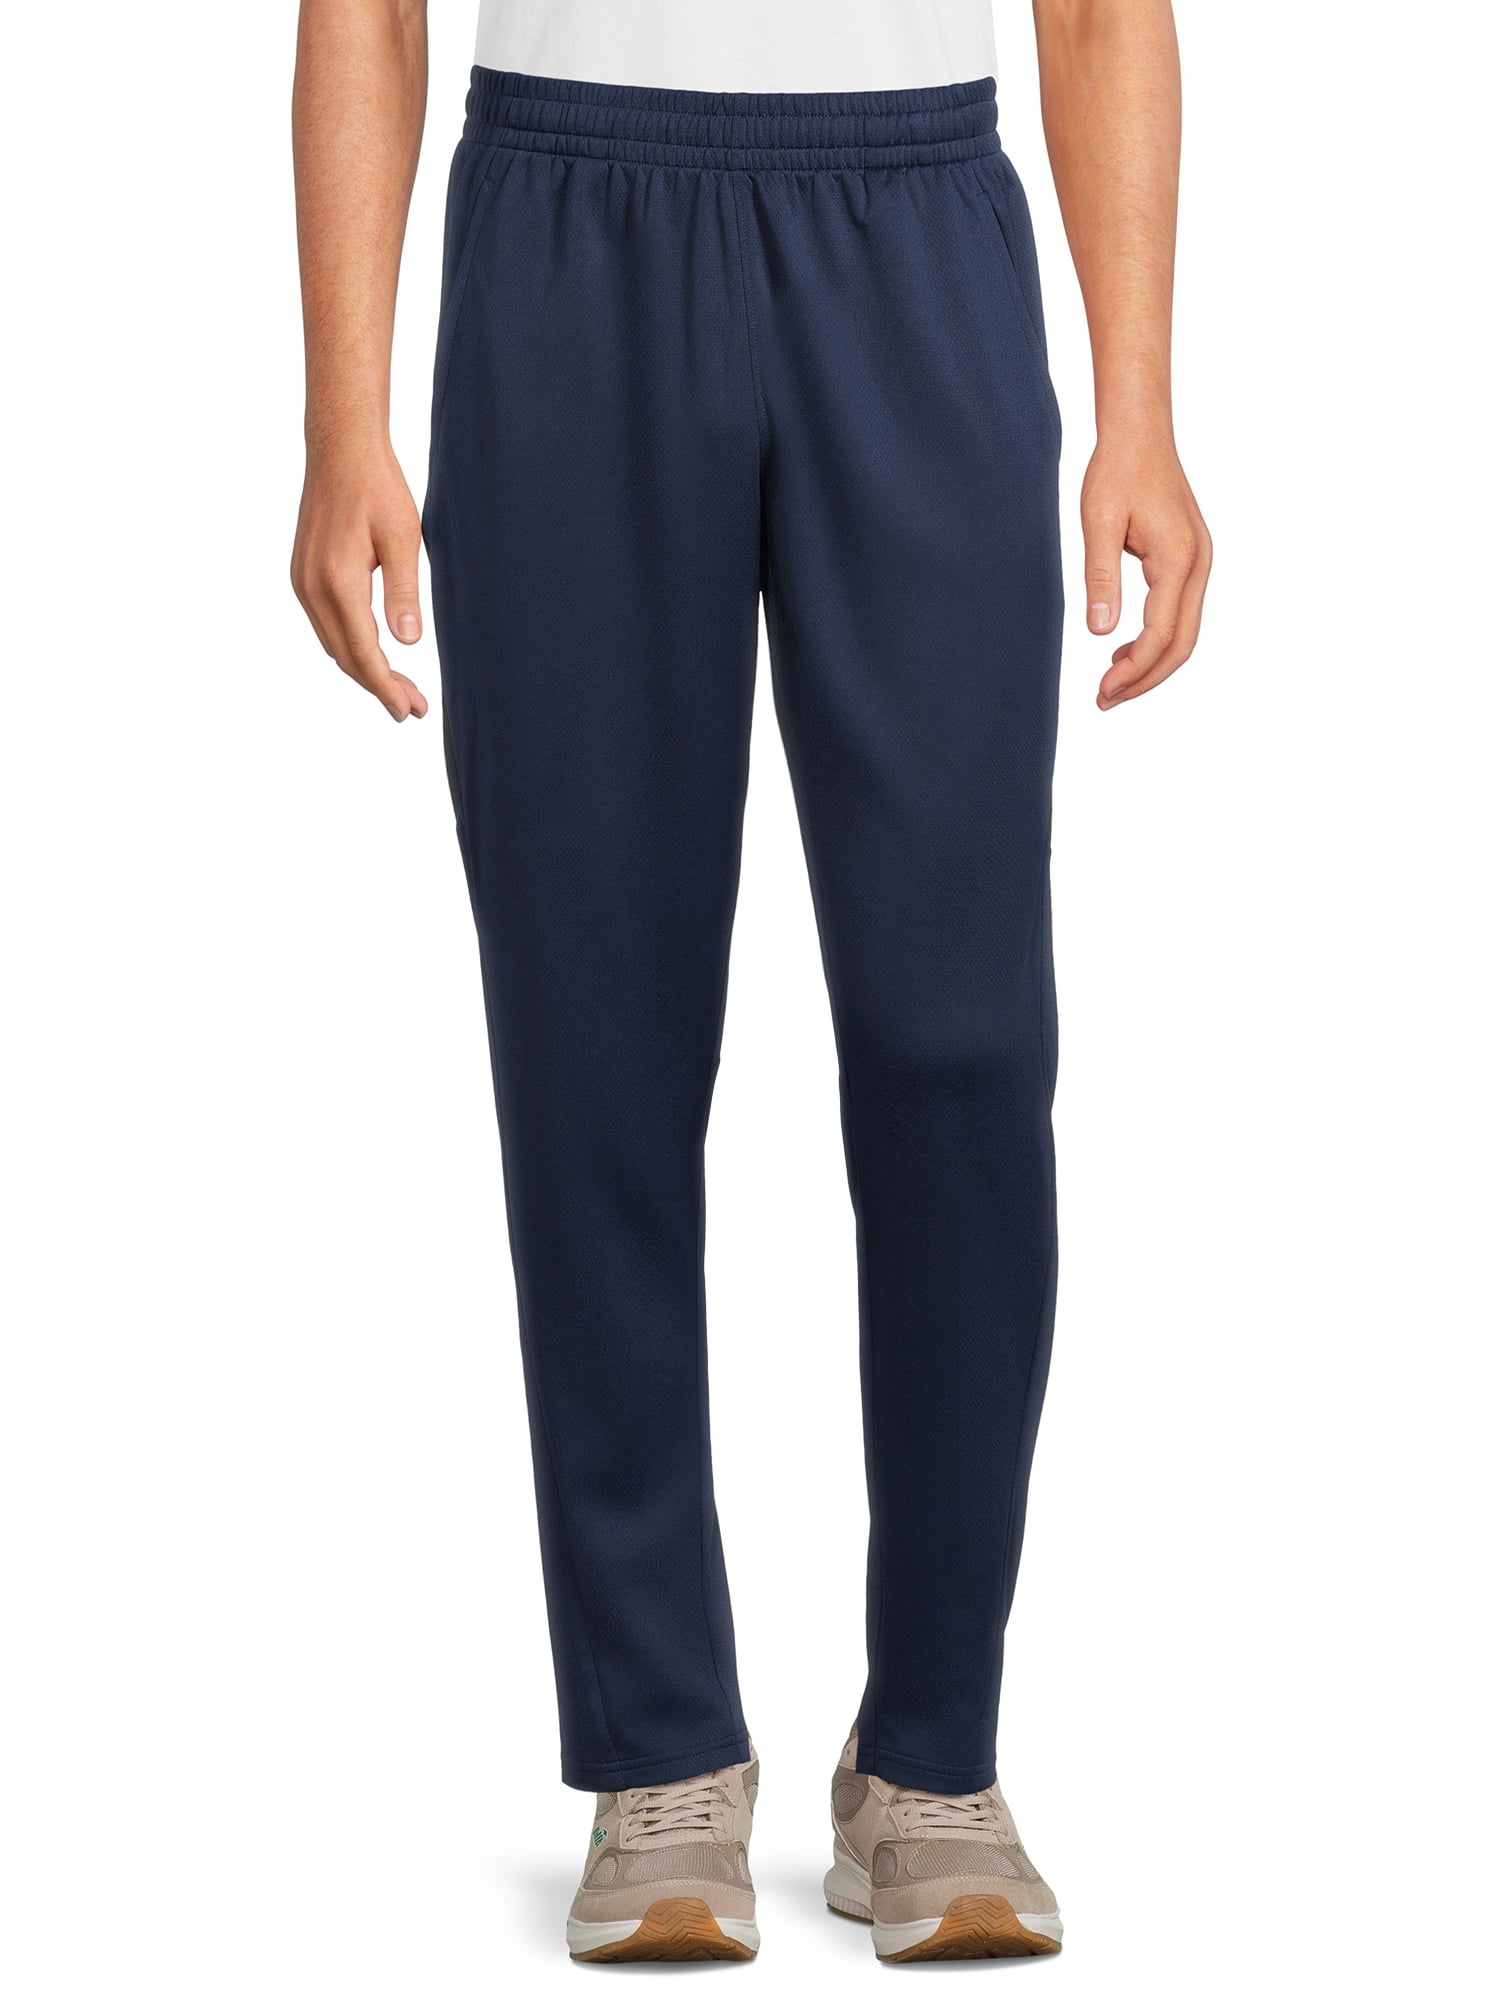 Athletic Works Men's Tennis Pants, Sizes up to 3XL - Walmart.com